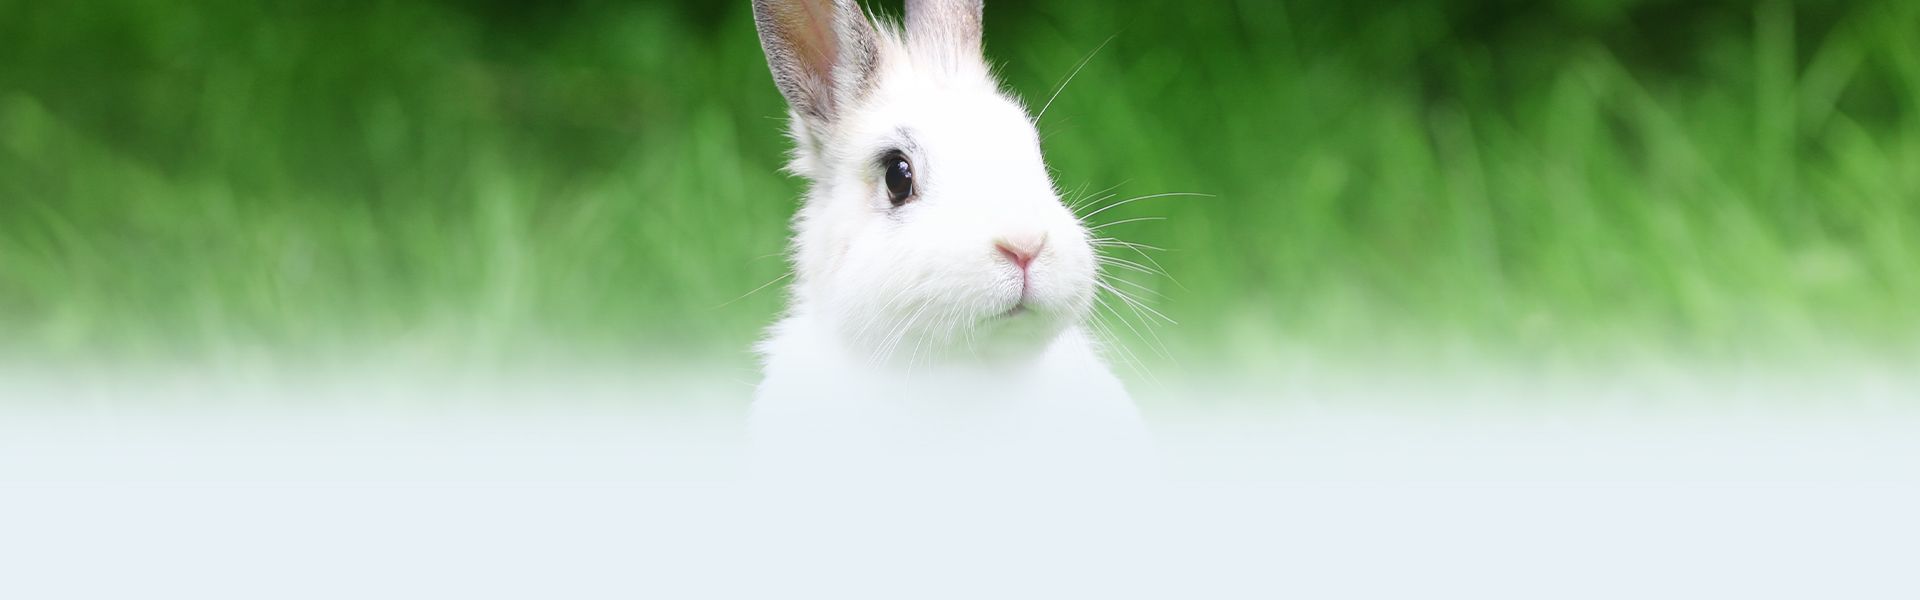 white rabbit among green grass